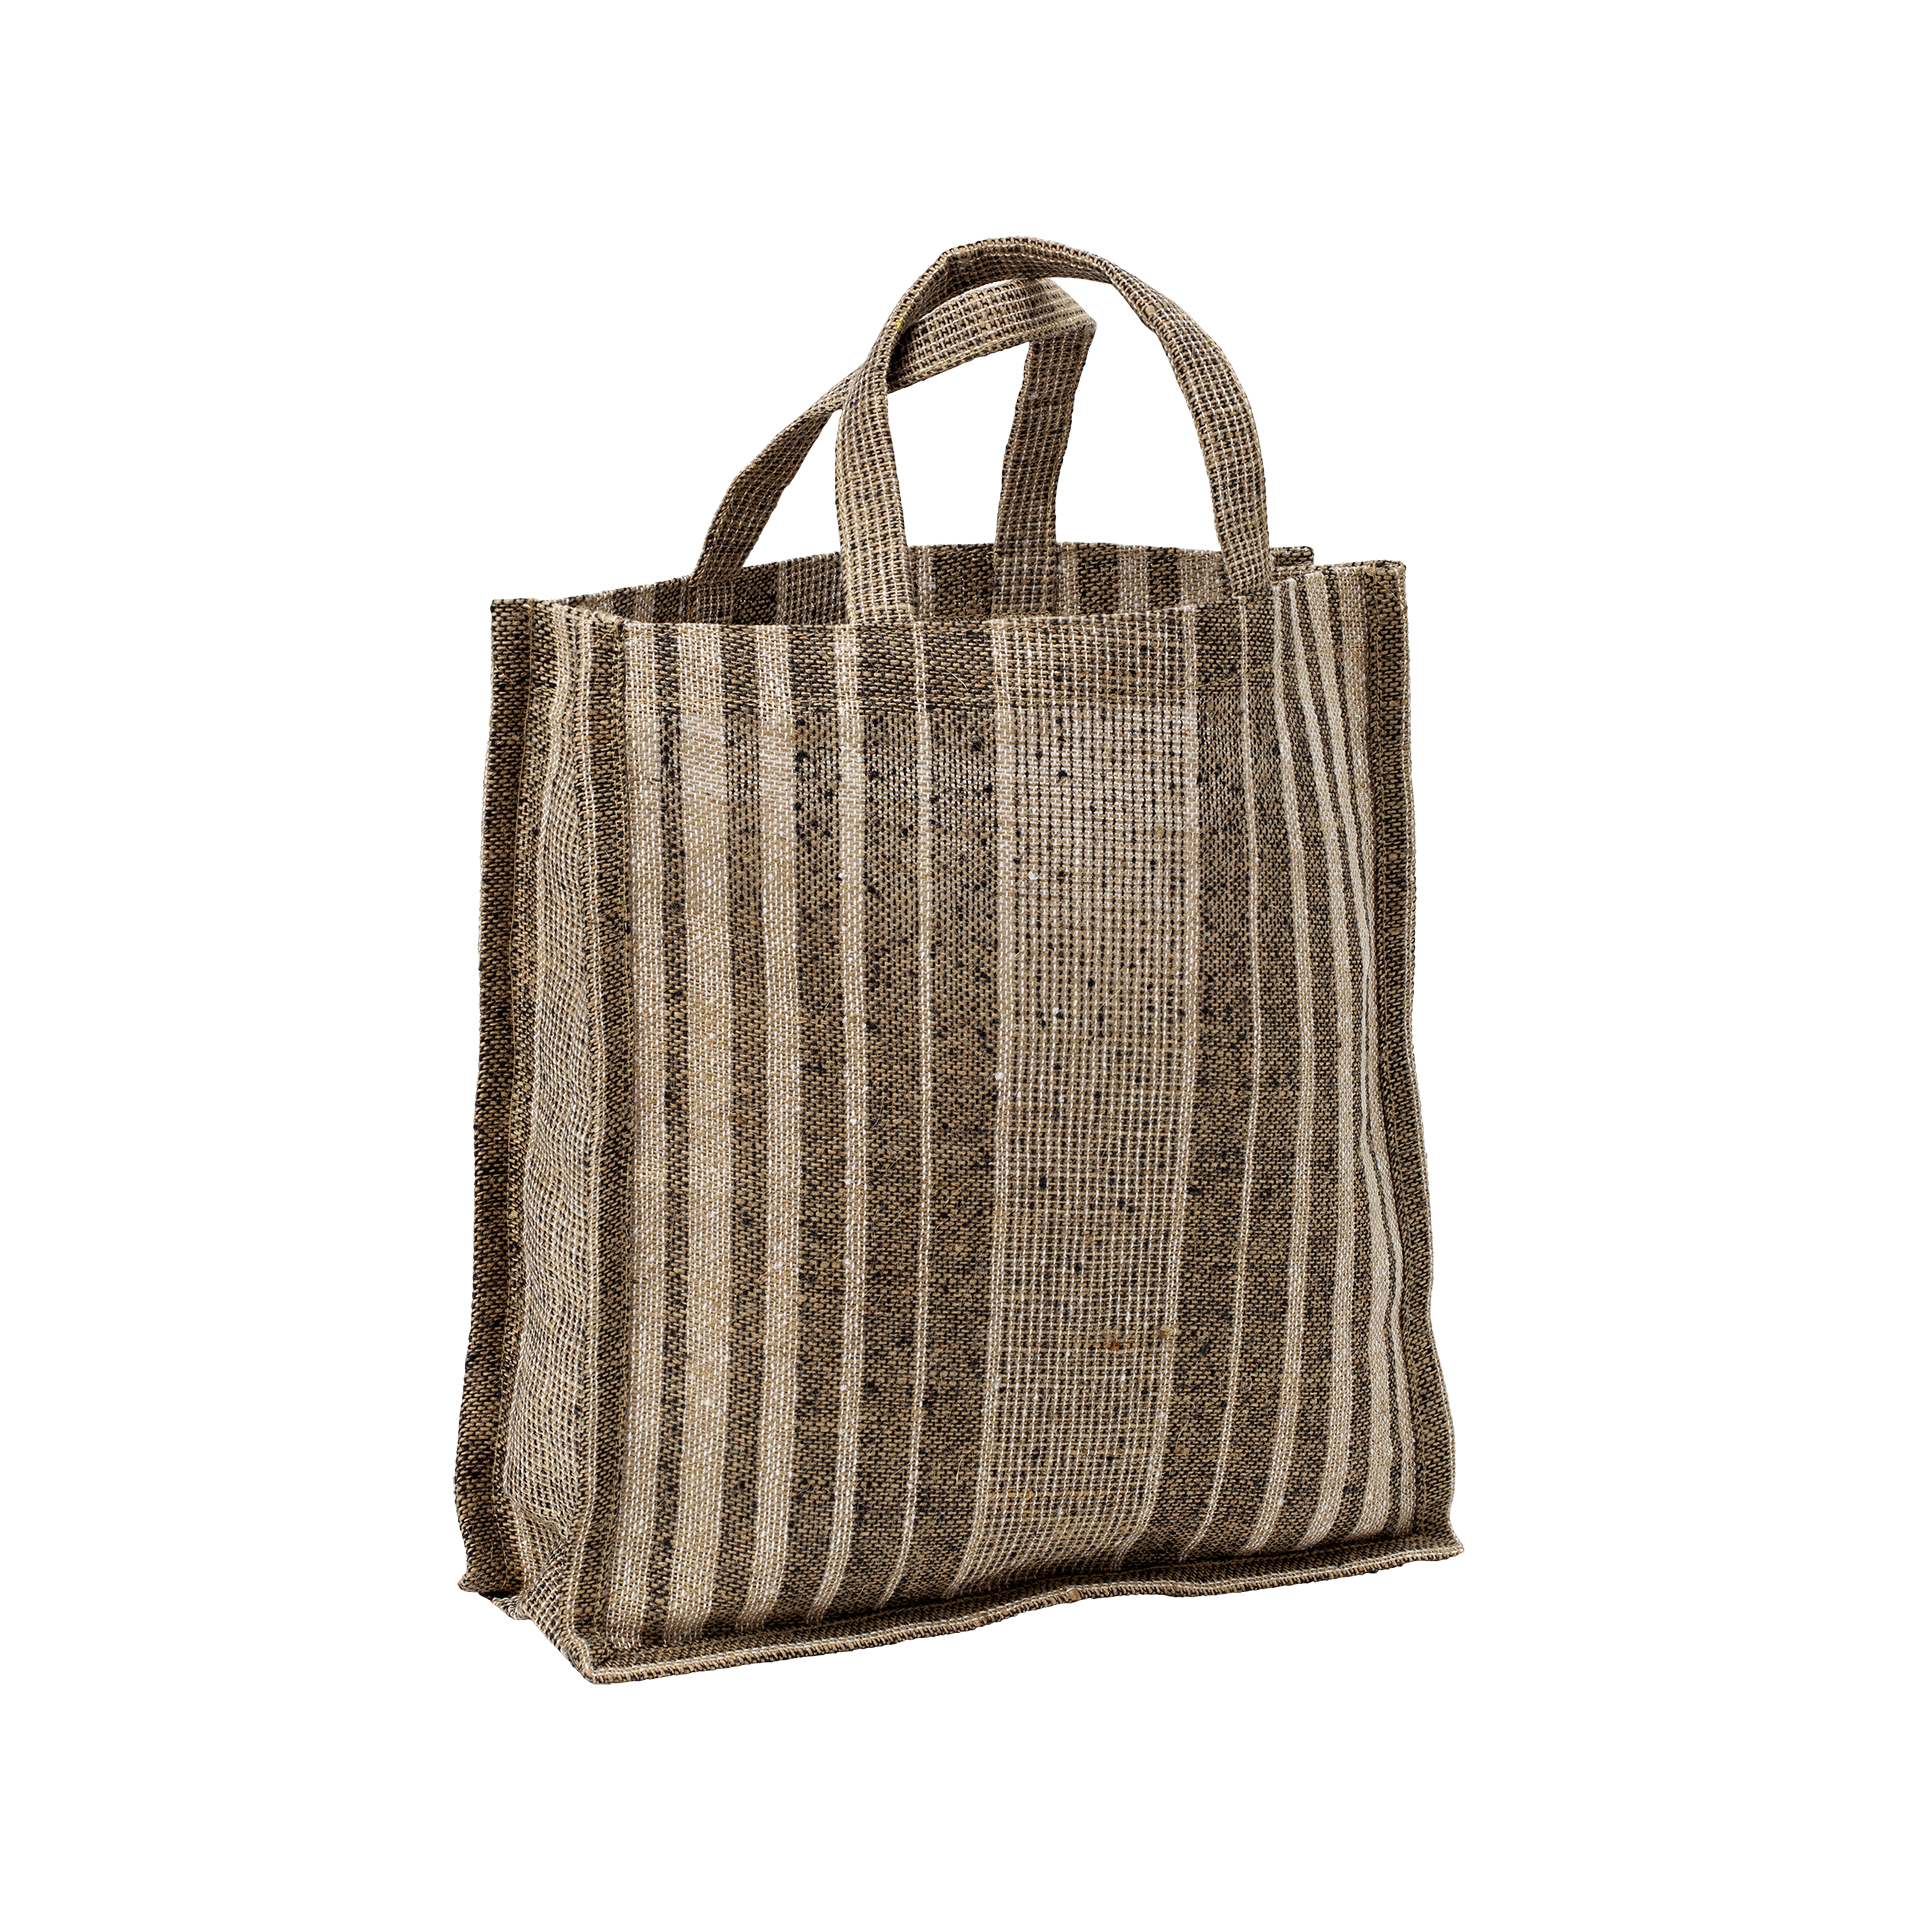 Multi-striped bag made of thin jute fabric